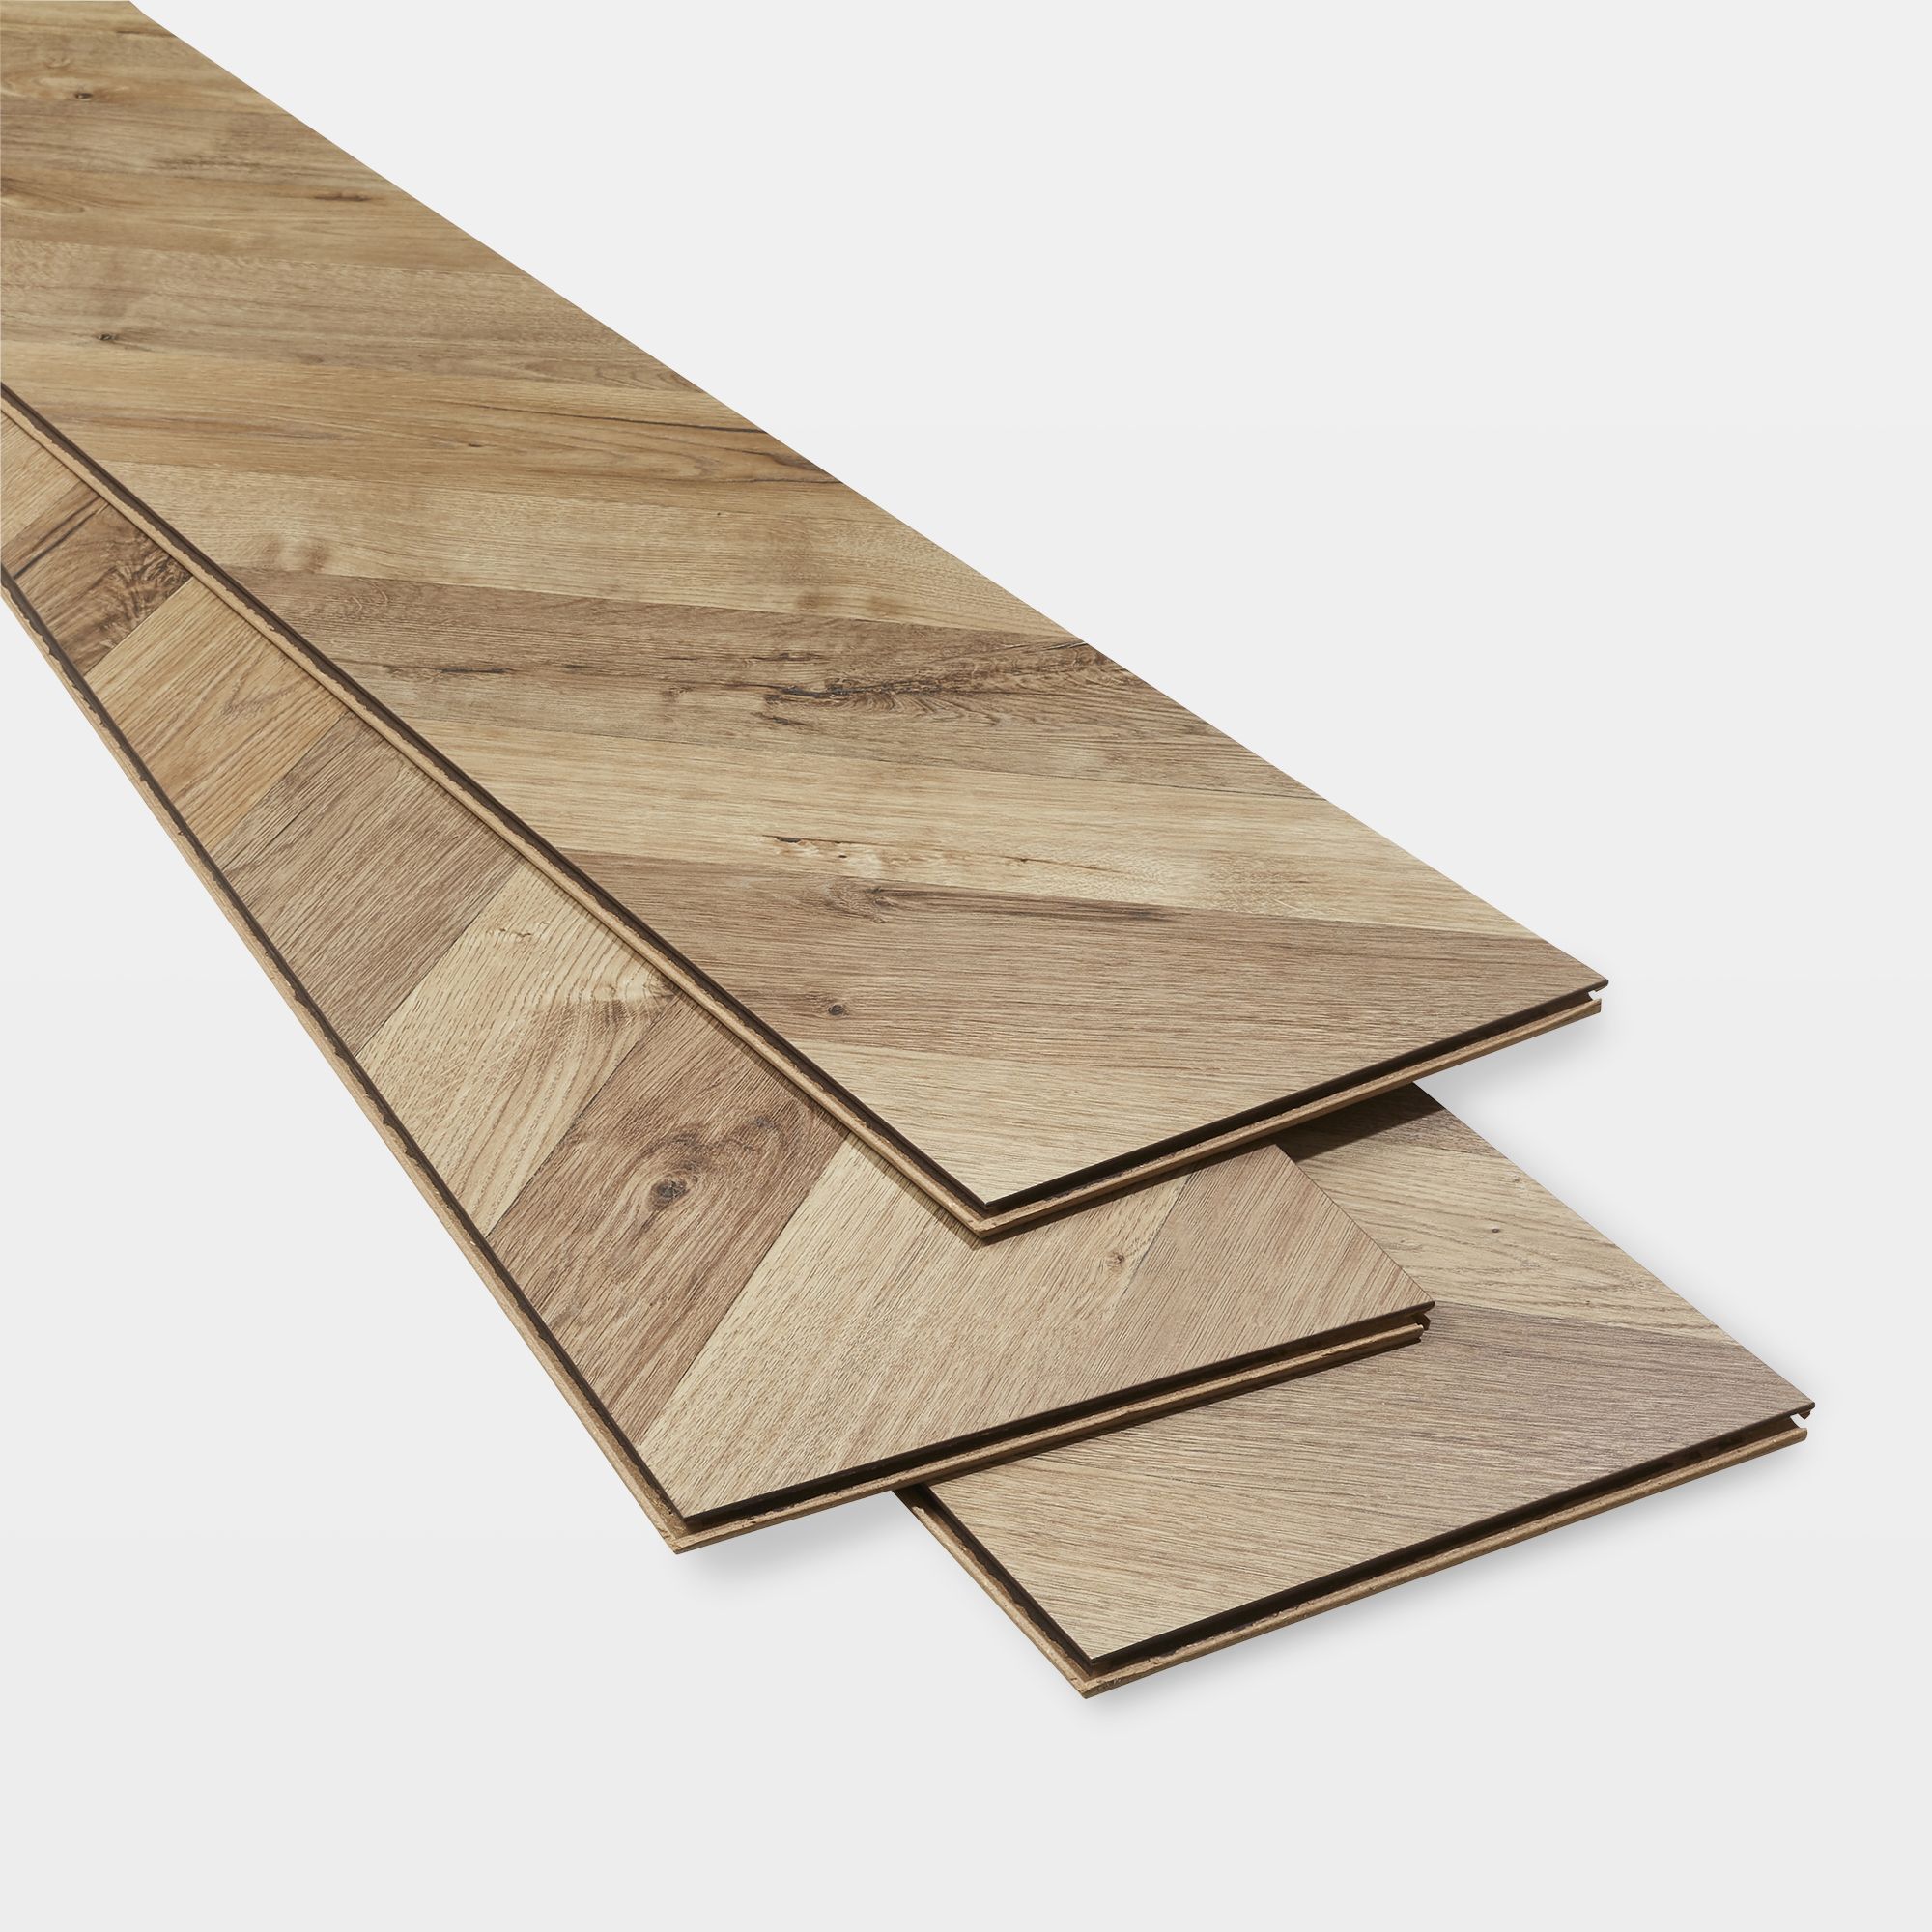 GoodHome Heanor Light oak effect Laminate Flooring, 2.7m²